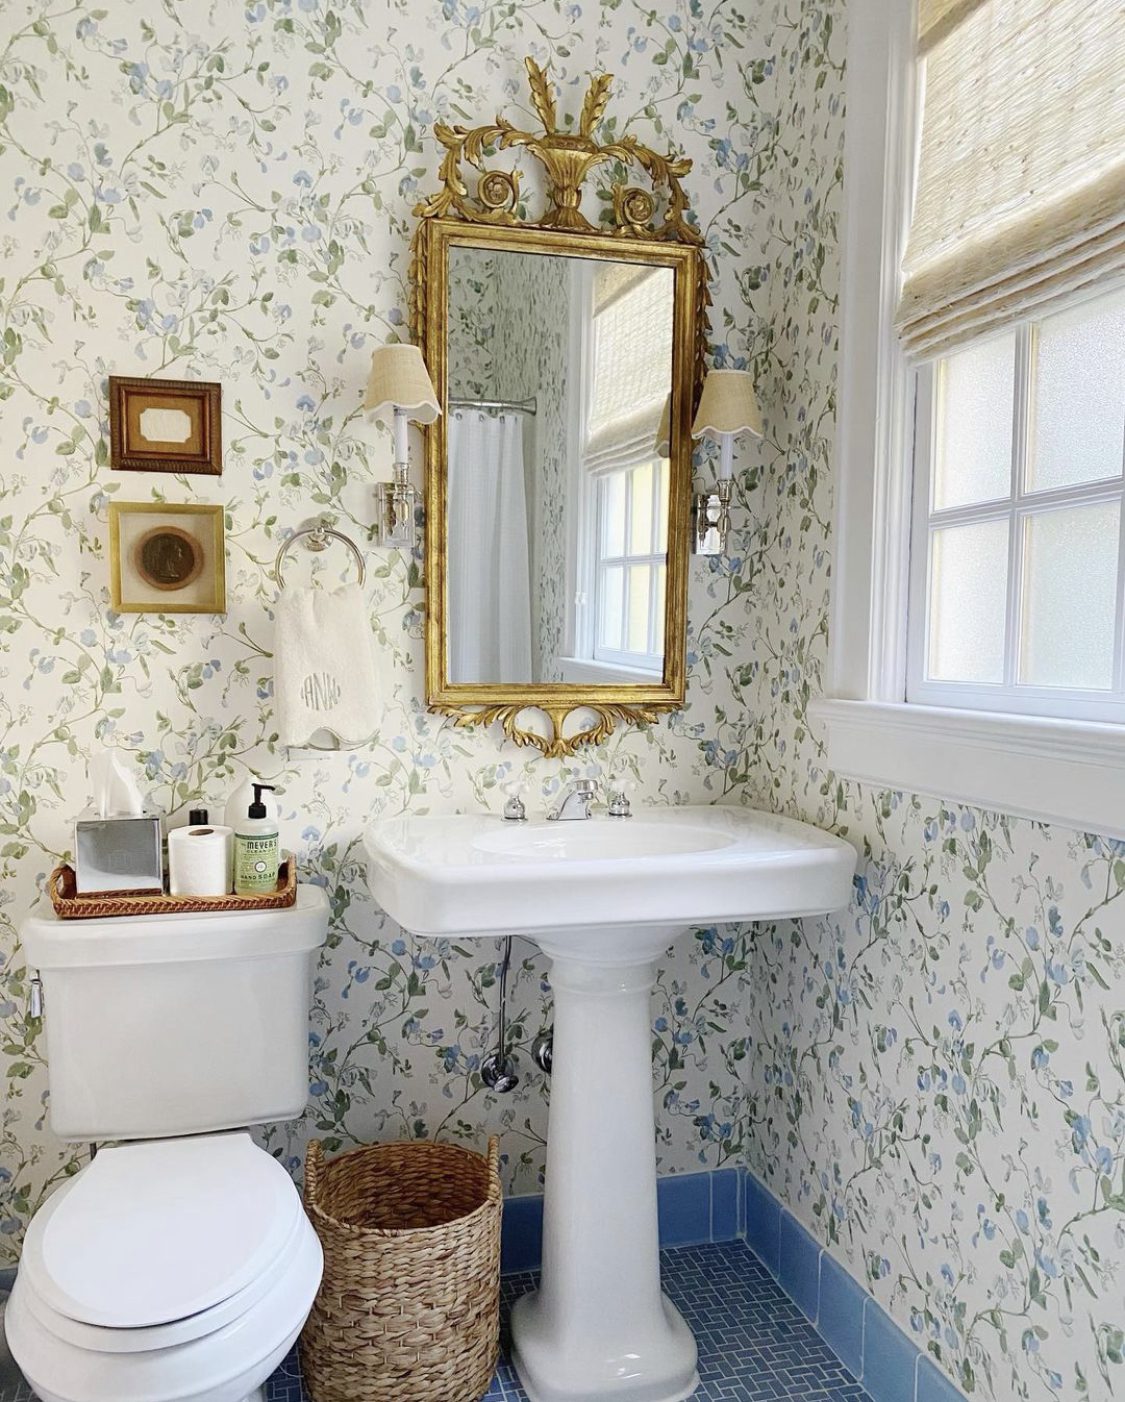 whitney-mcgregor-interior-design-grandmillennial-bathroom-vintage-tile-blue  - The Glam Pad